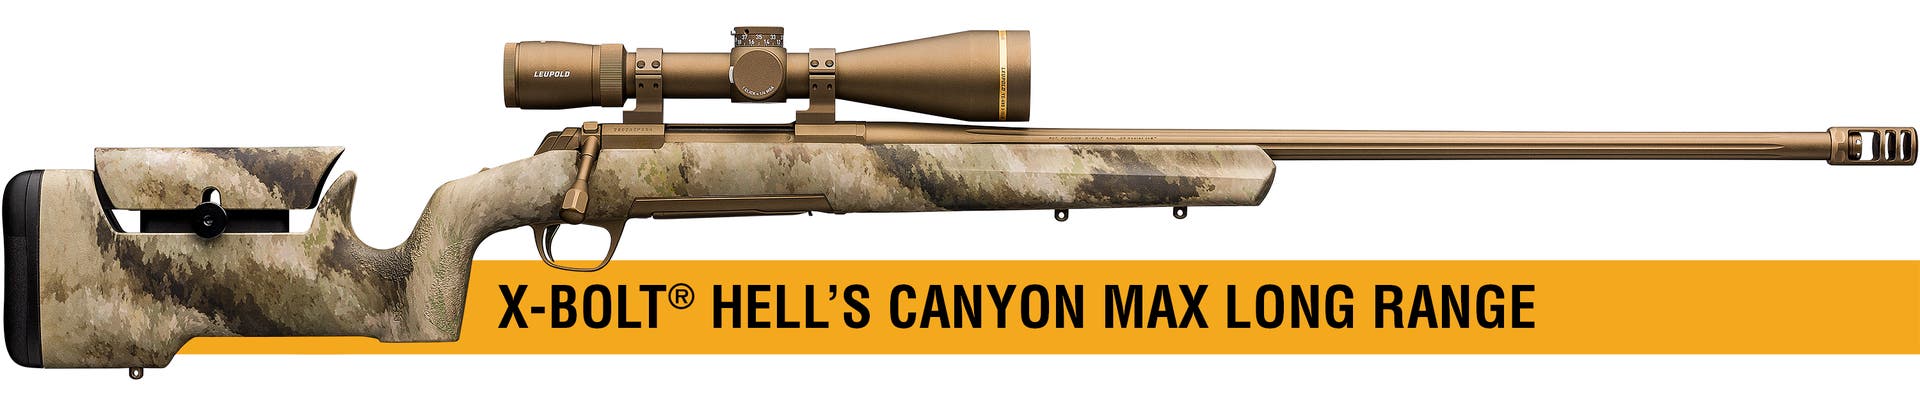 X-Bolt Hell's Canyon Max Long Range